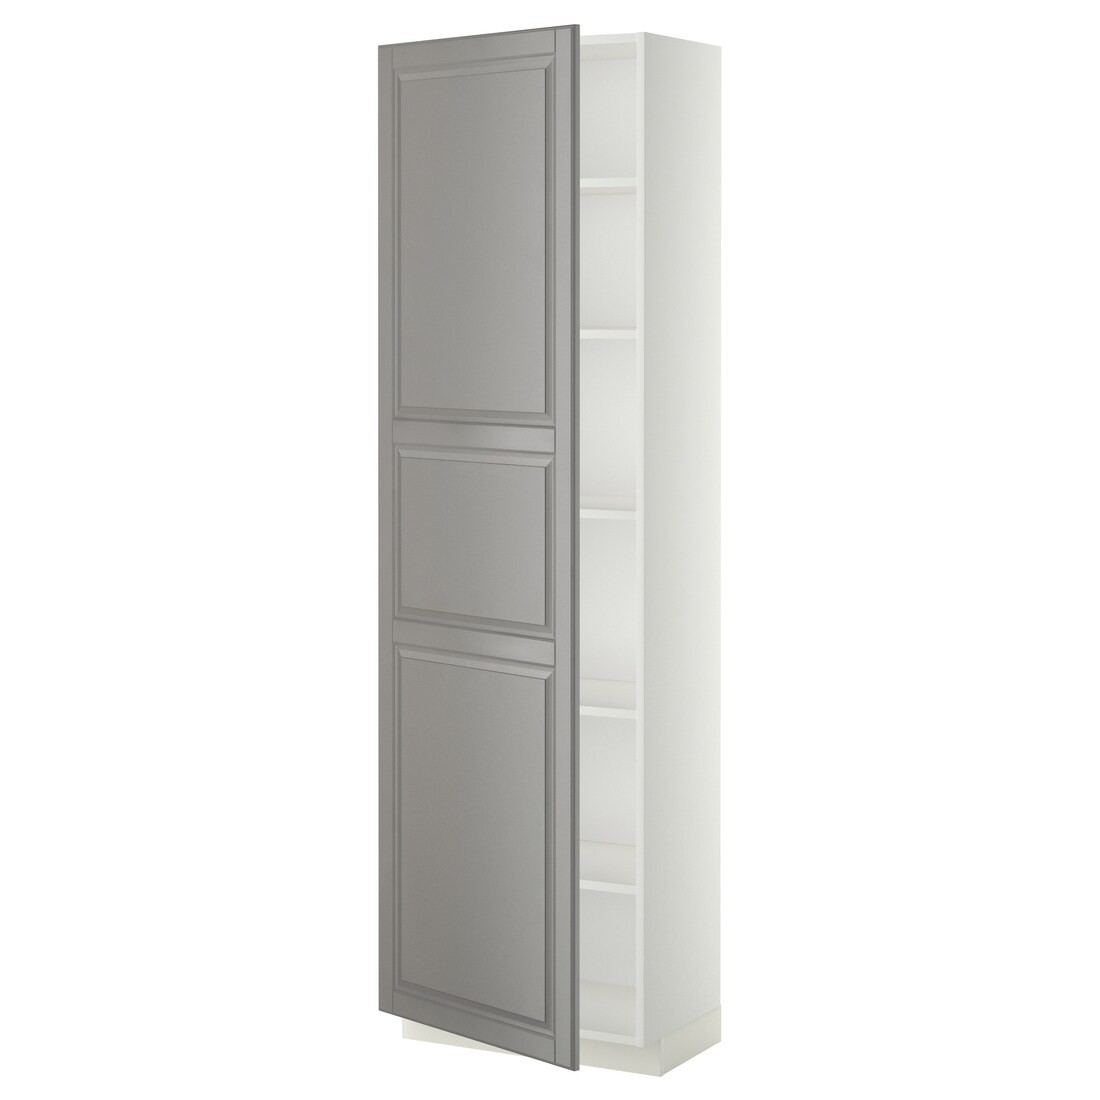 METOD МЕТОД Высокий шкаф с полками, белый / Bodbyn серый, 60x37x200 см